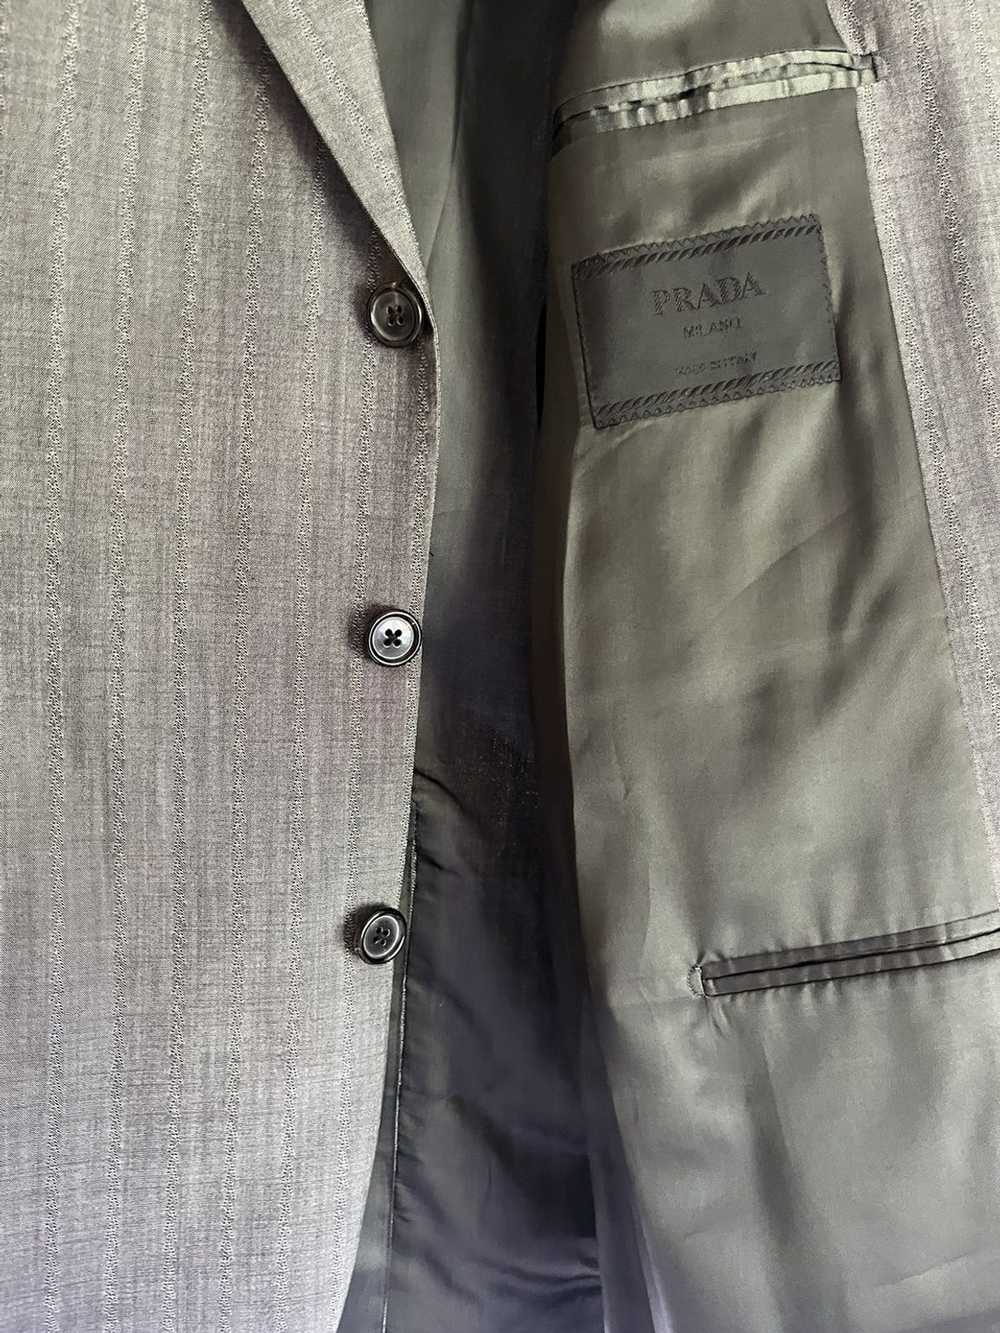 Prada Prada suit jacket - image 6